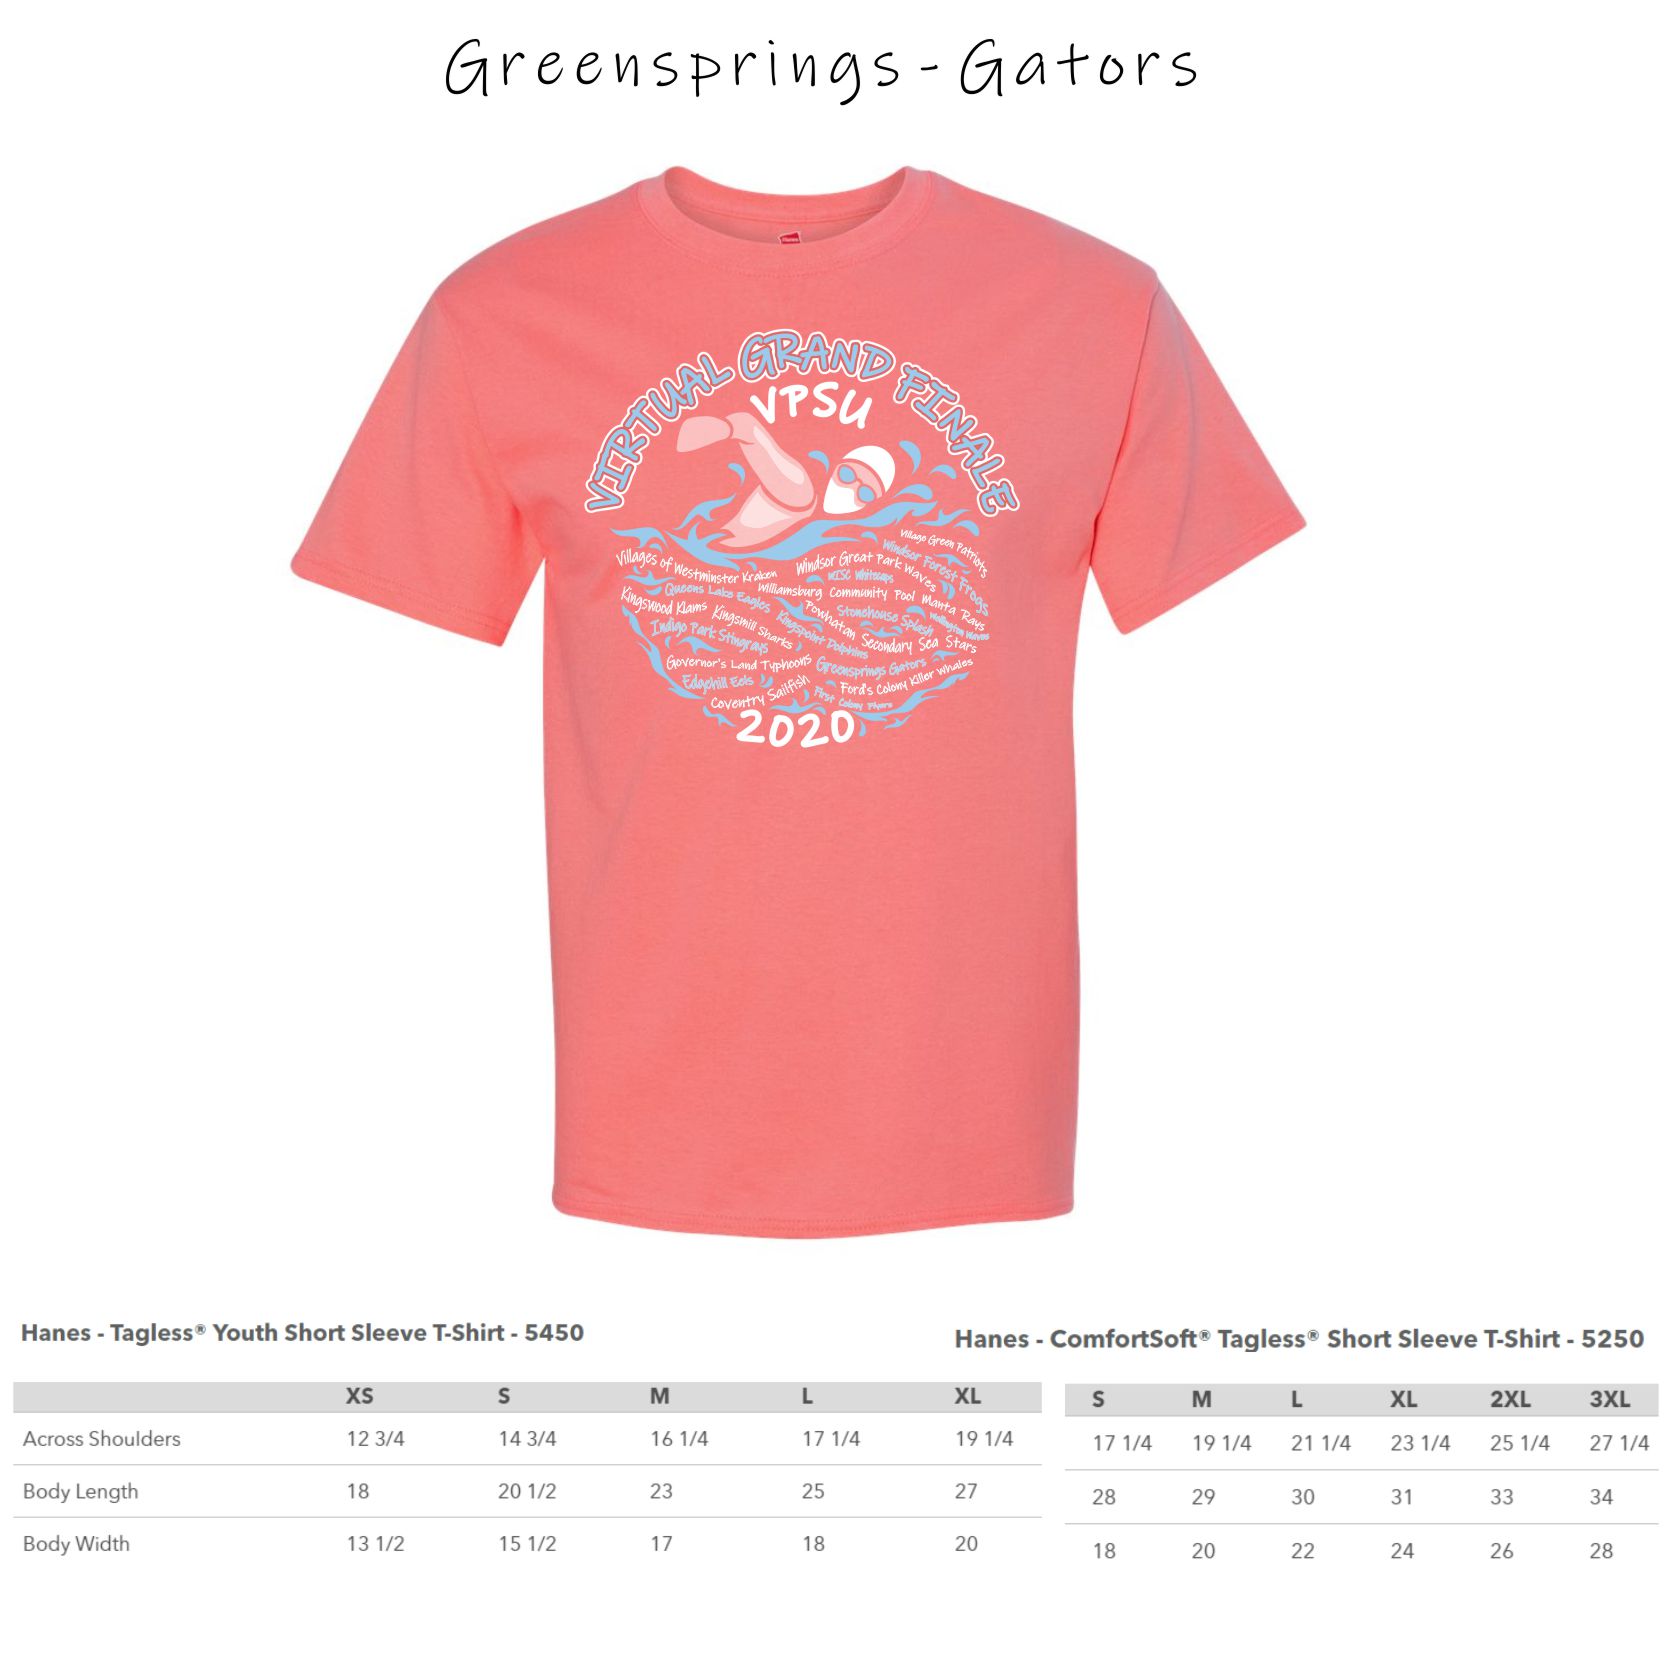 1 - Greensprings Gators